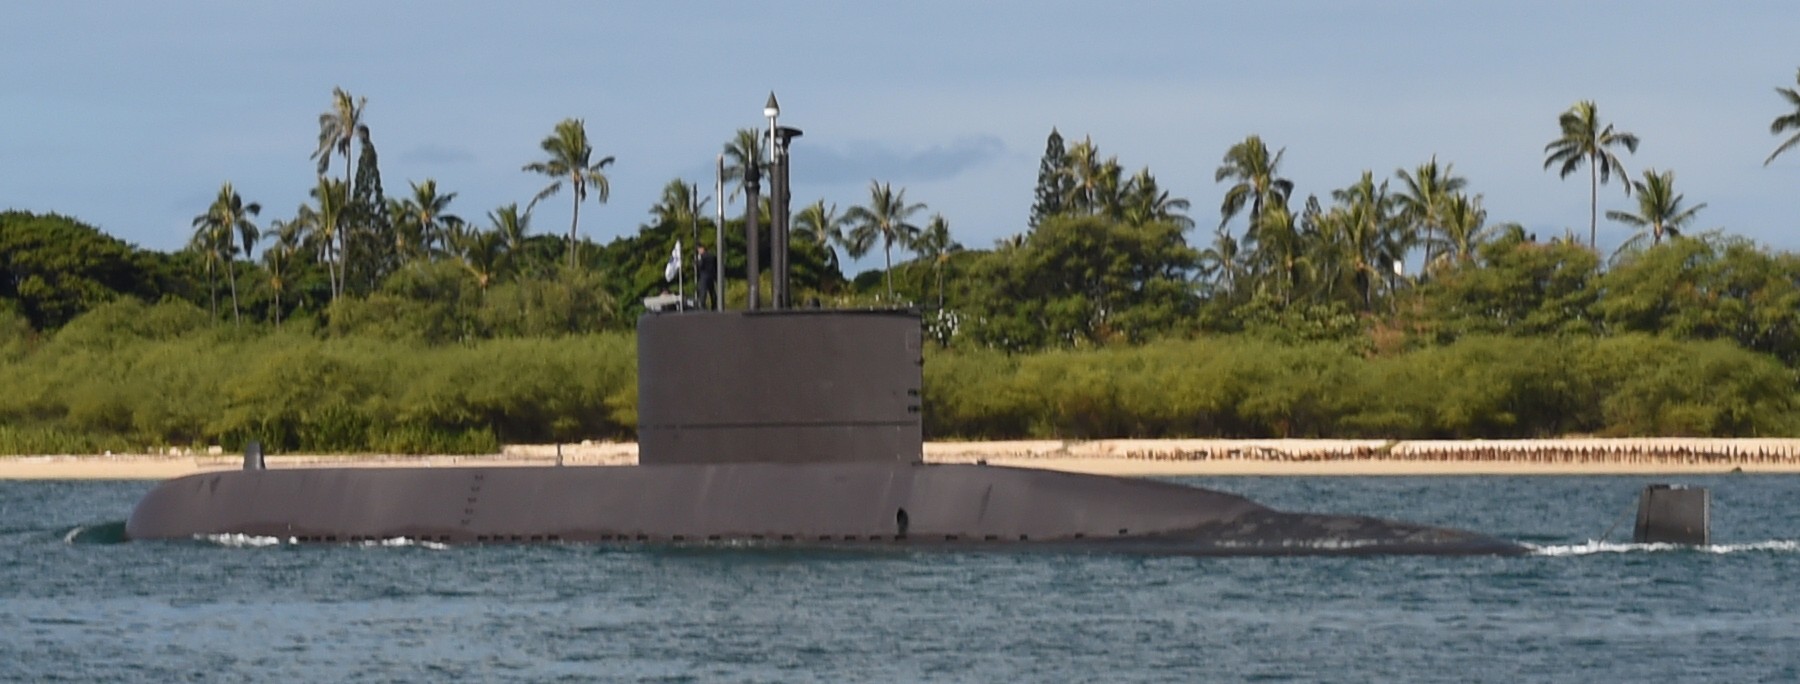 ss-071 roks lee eokgi jang bogo class kss-i type 209-1200 attack submarine republic of korea navy rokn 533mm sut torpedo ugm-84 harpoon ssm 12